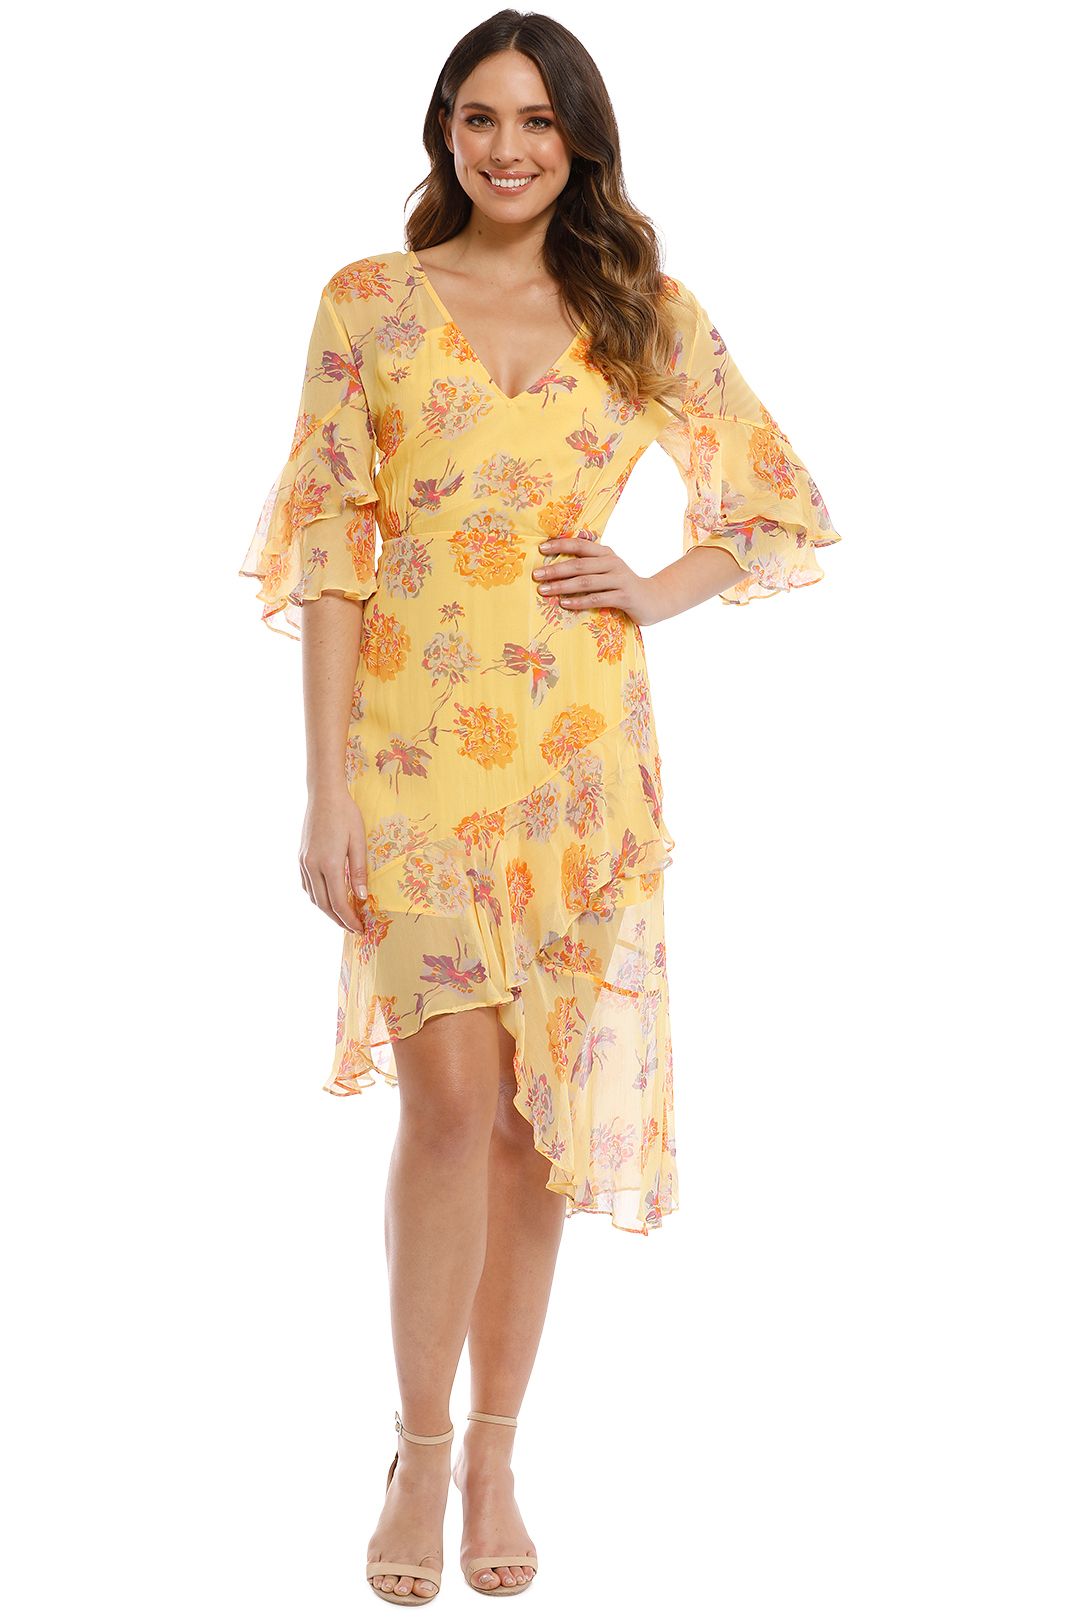 Talulah - Cerulean Midi Dress - Yellow Vintage Floral - Front